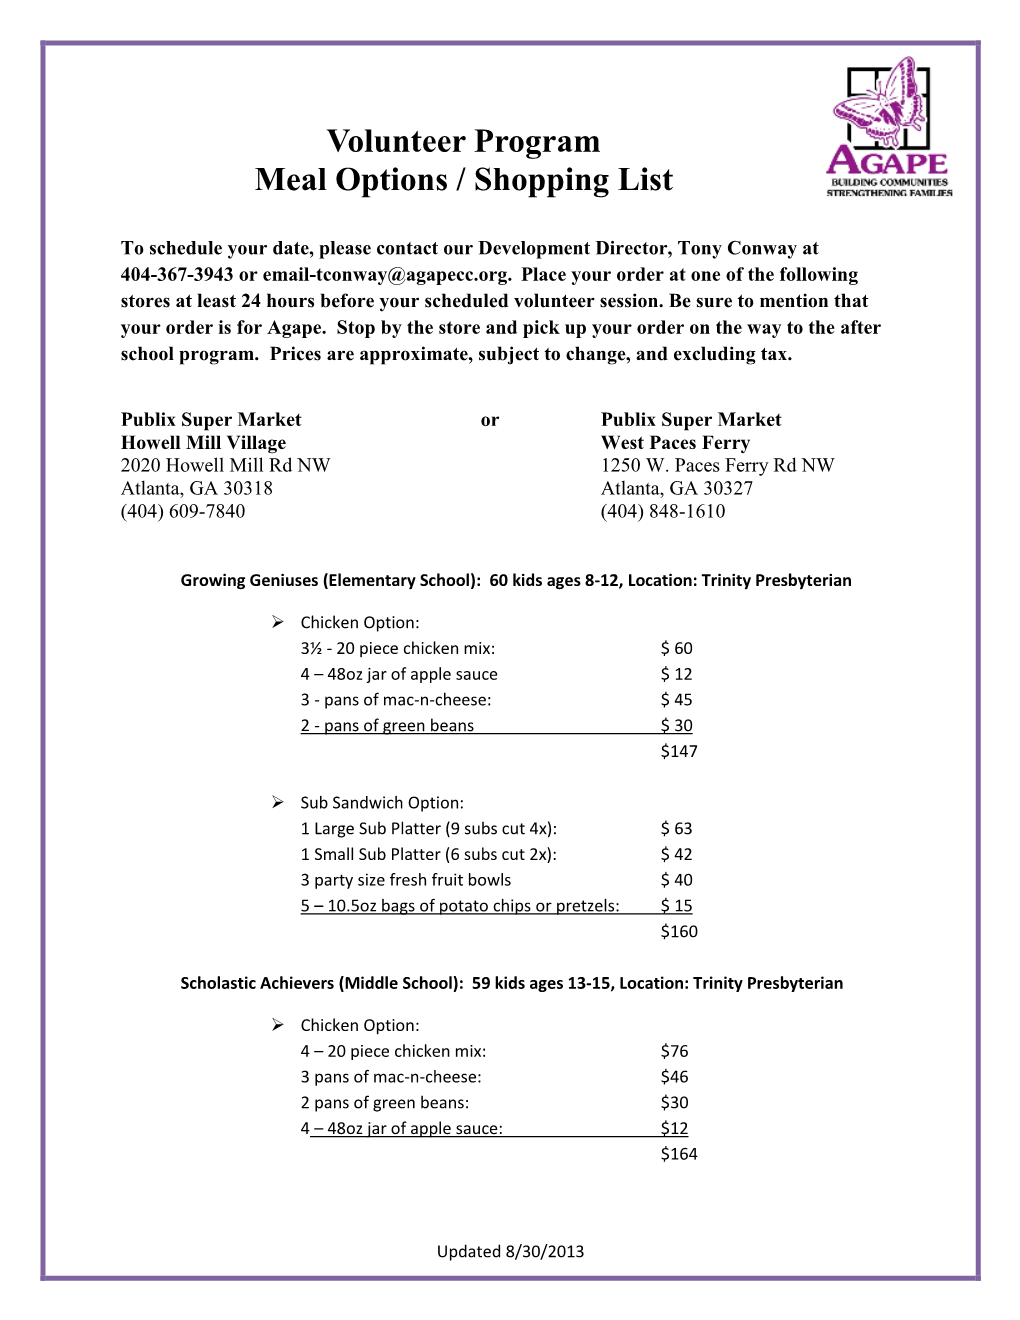 Volunteer Program Meal Options / Shopping List